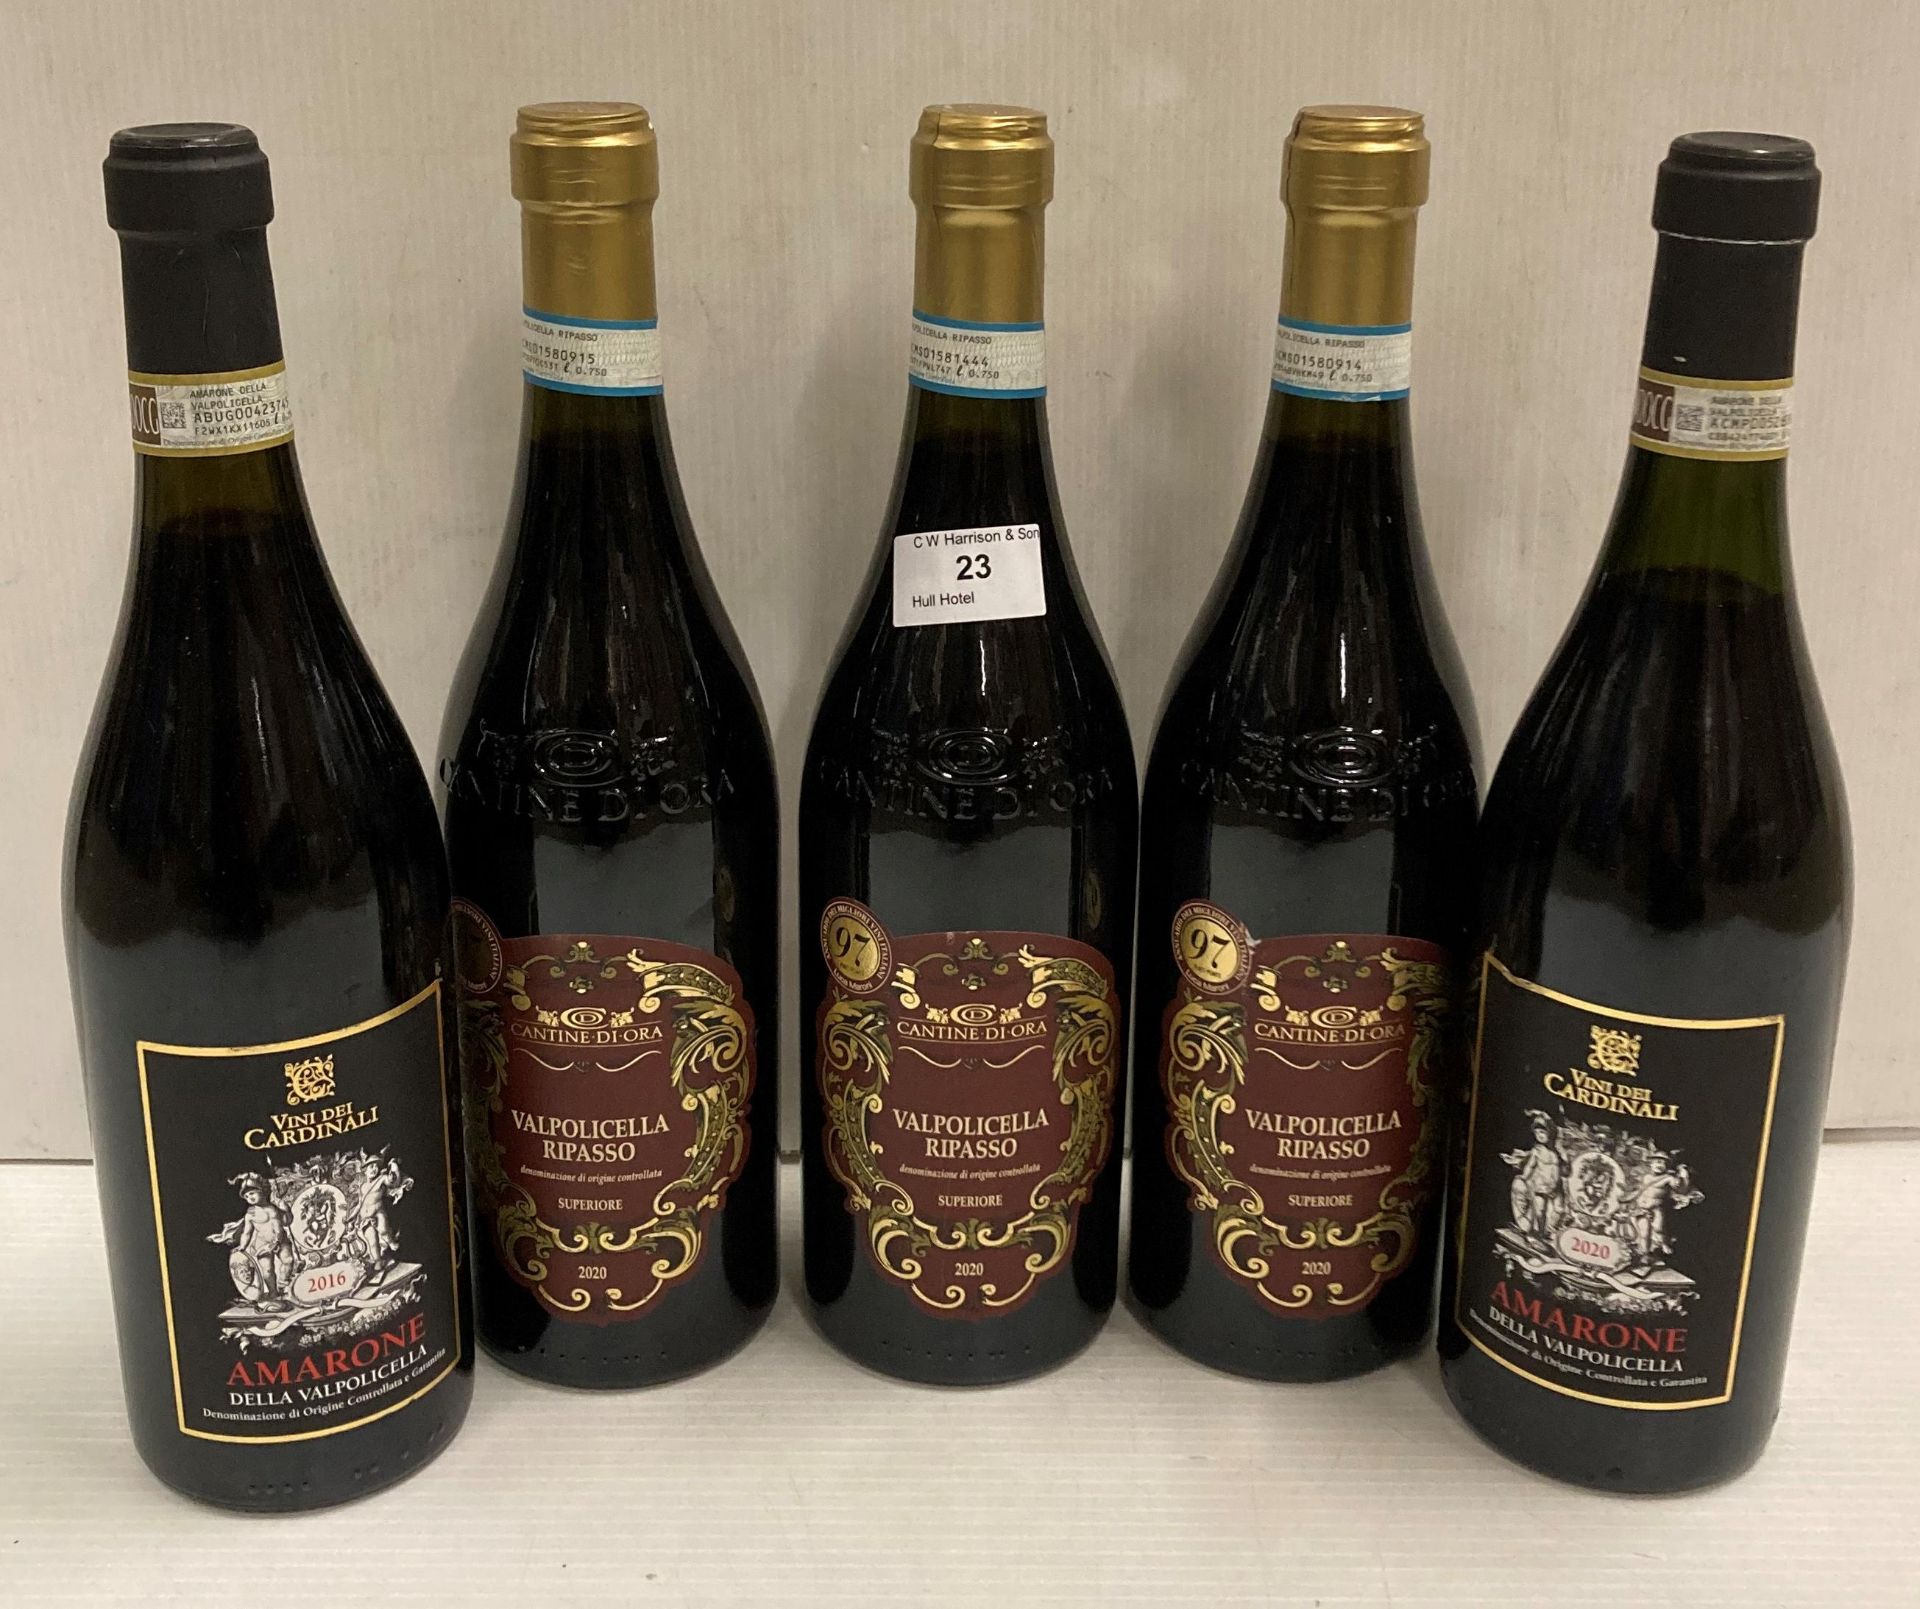 5 x 75cl bottles Valpolicella red wine by Vini dei Cardinali,